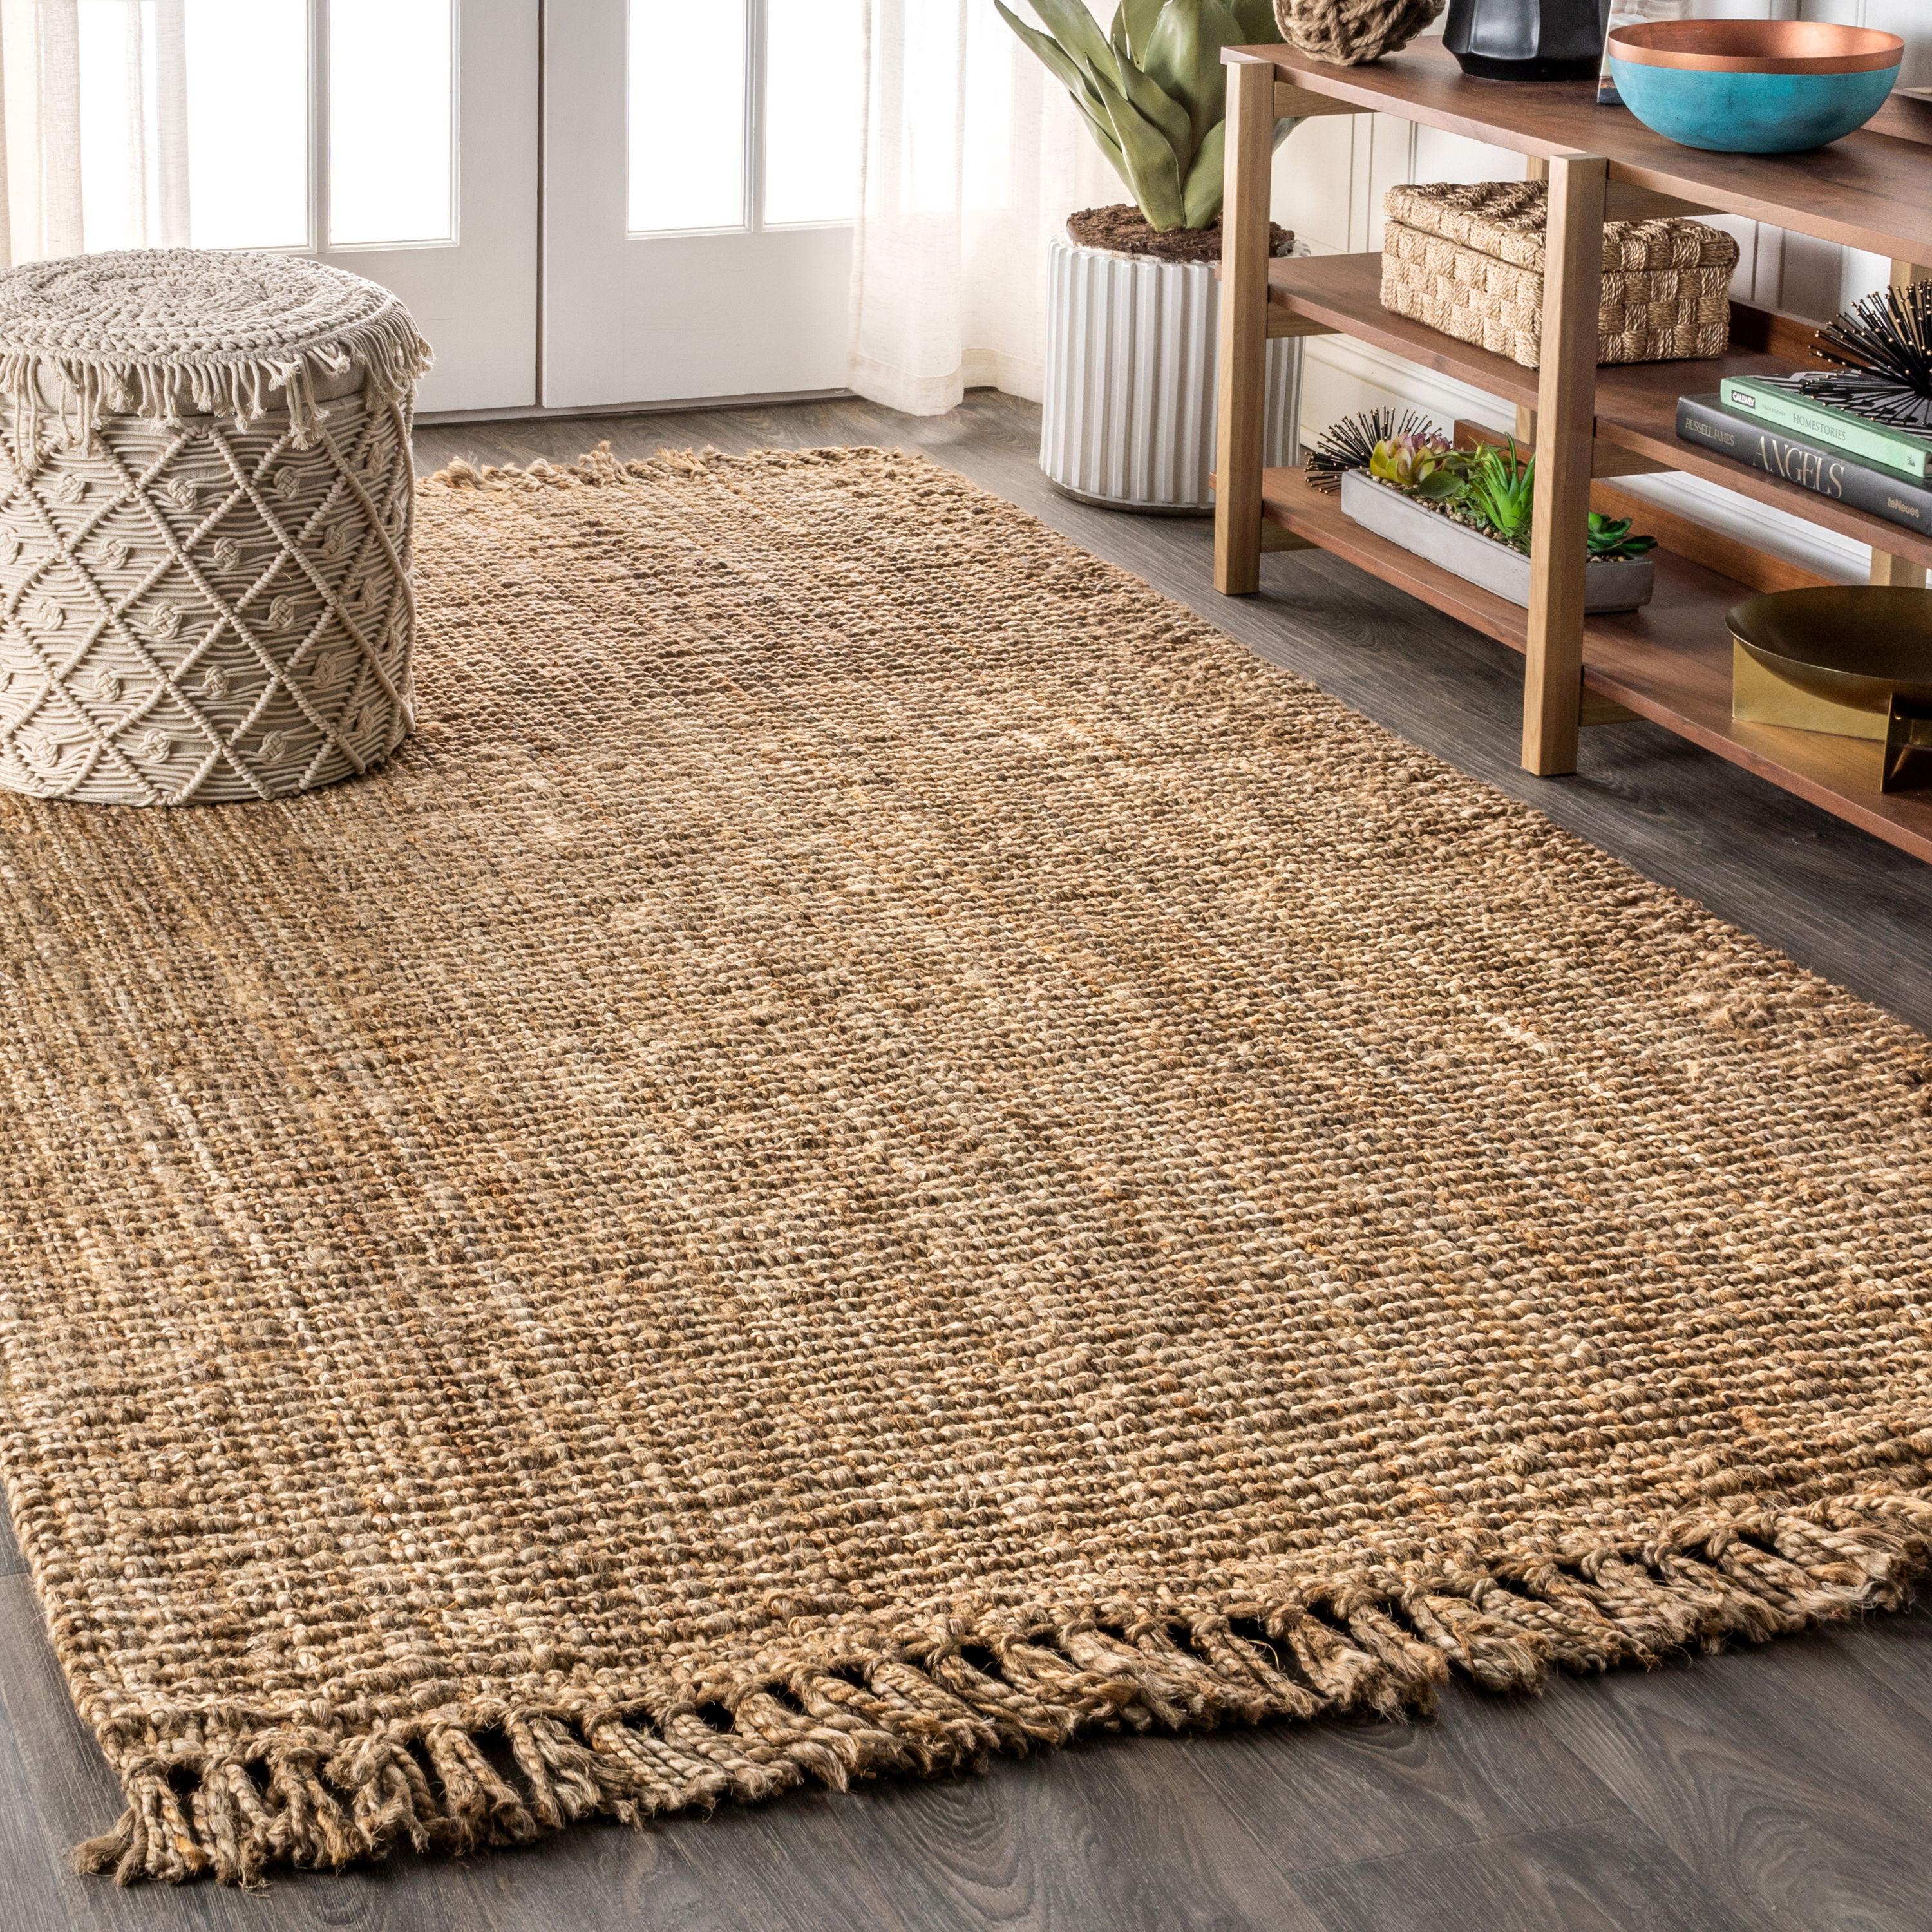 Rectangle Hand Woven Jute Rug Braided 5x8 Feet Area Rugs Home Living Rugs Carpet 